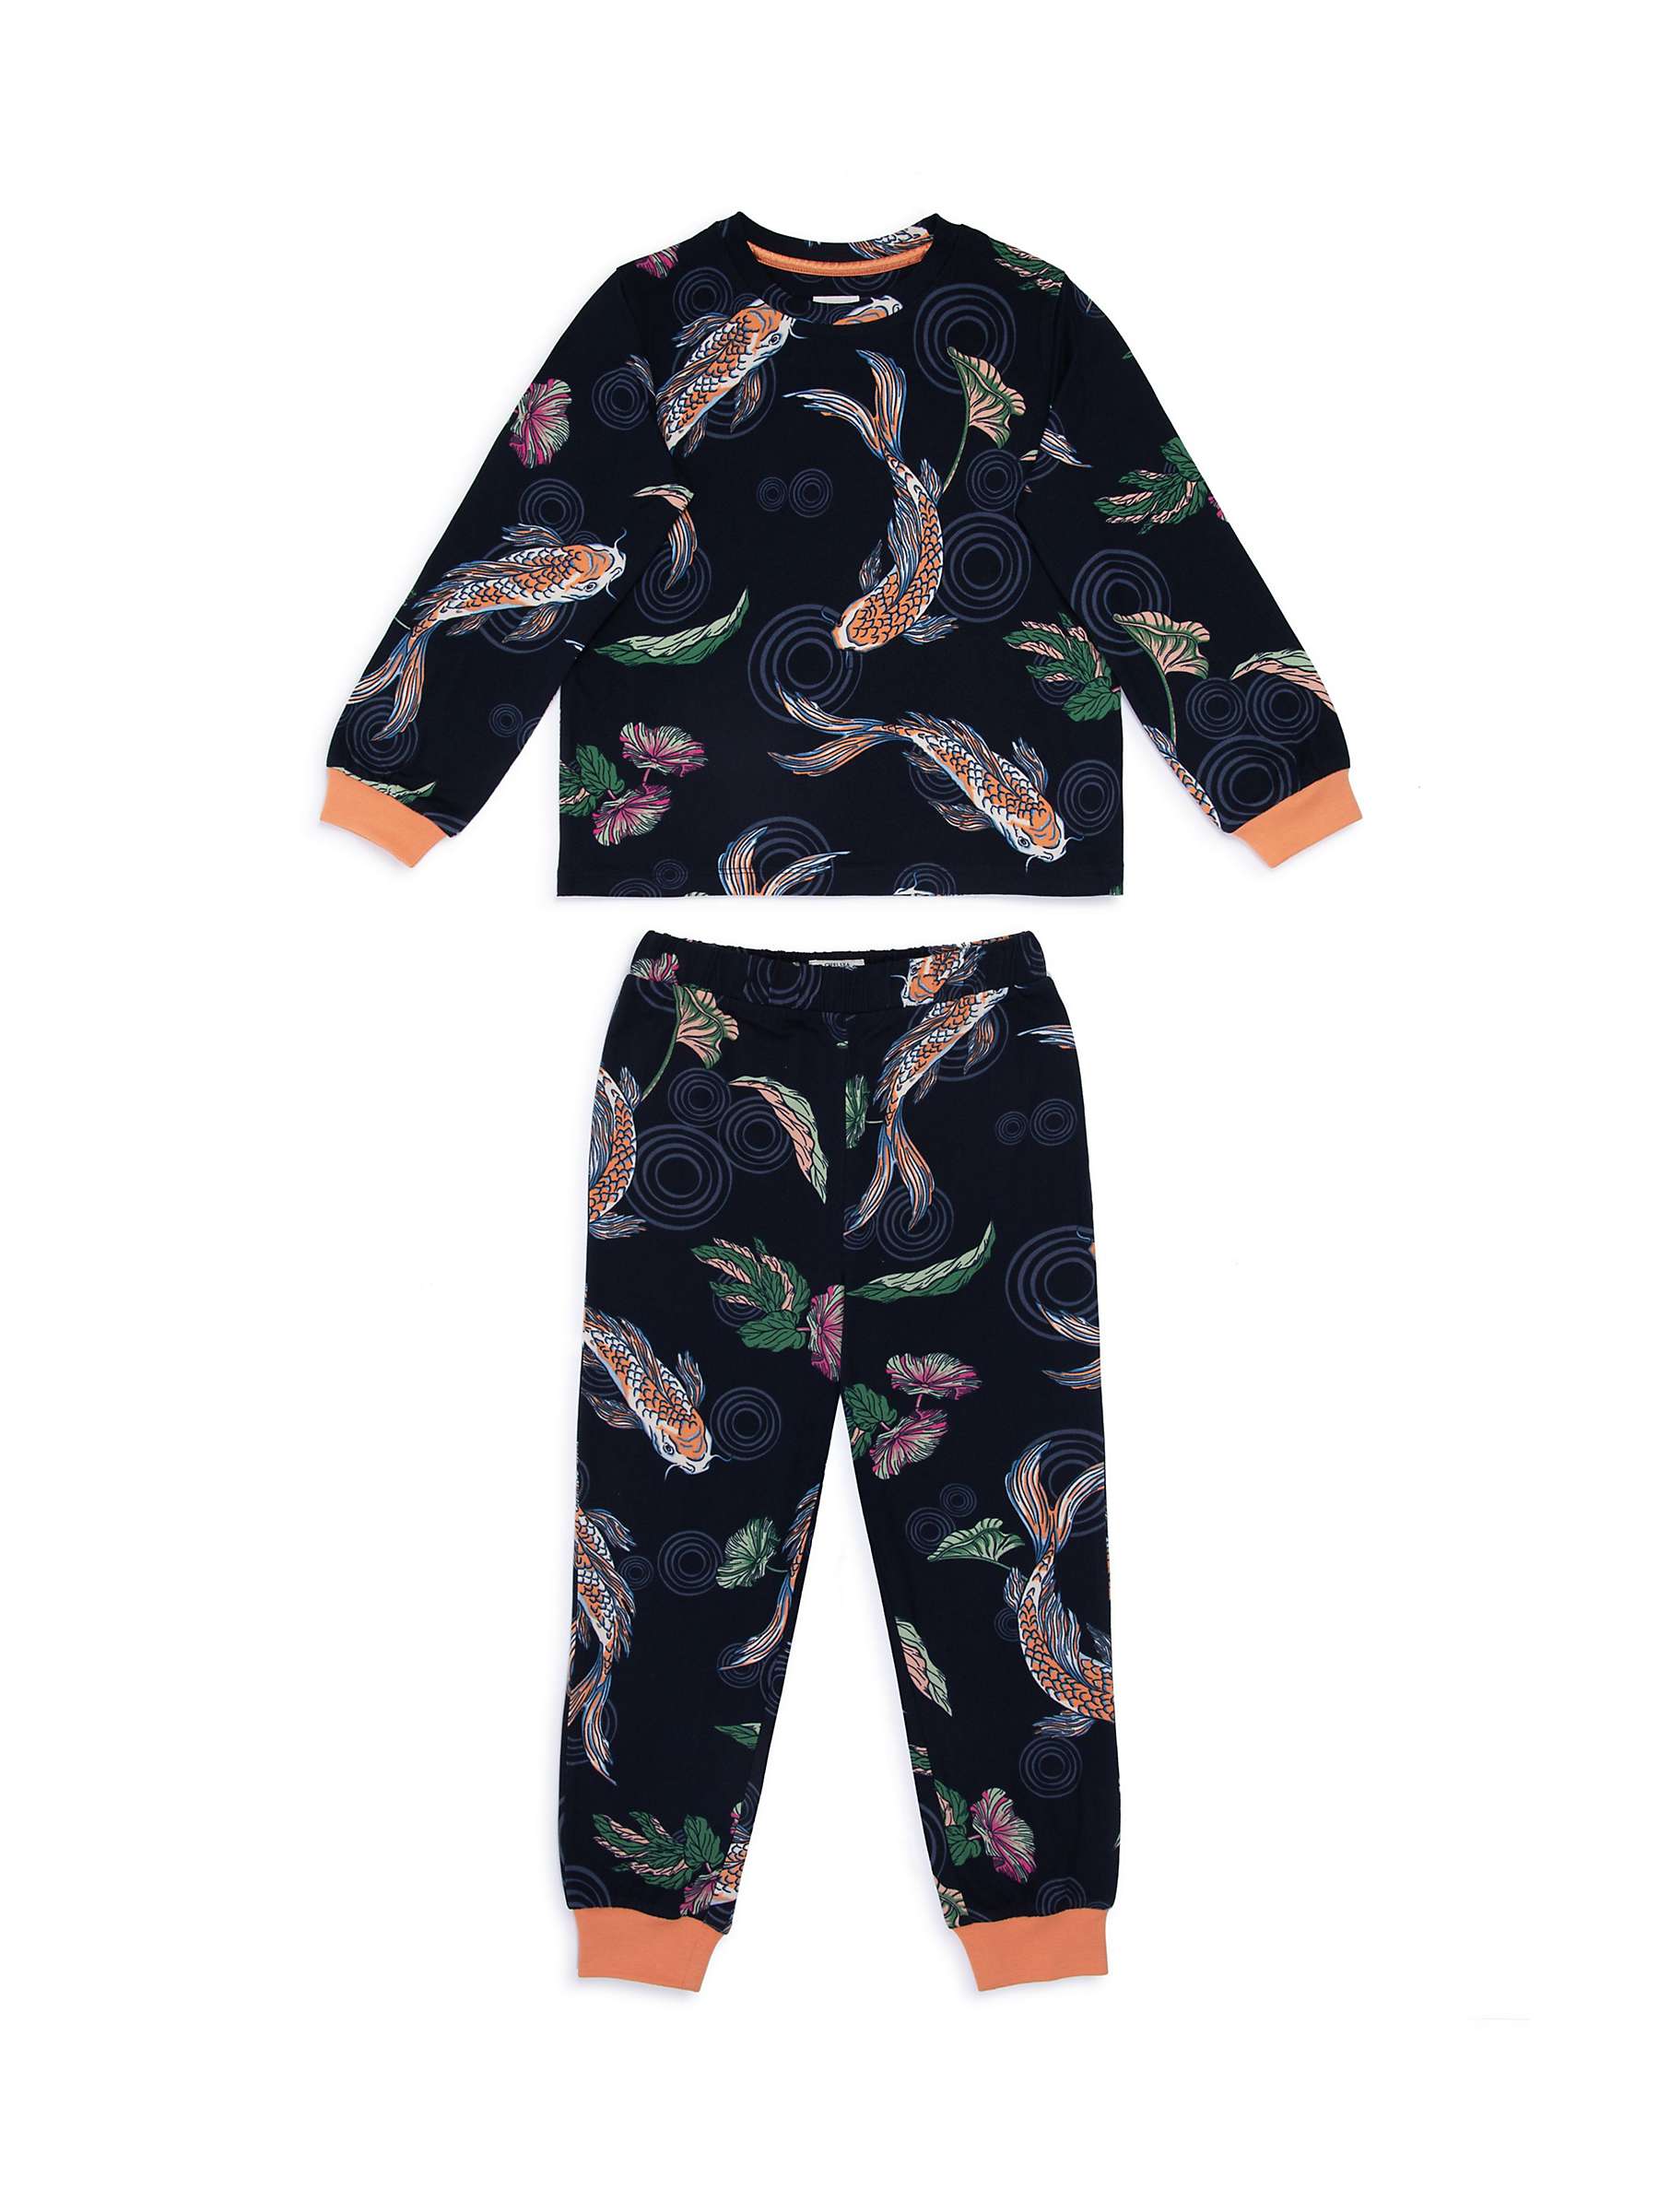 Buy Chelsea Peers Kids' Koi Fish Print Long Pyjama Set, Navy/Multi Online at johnlewis.com